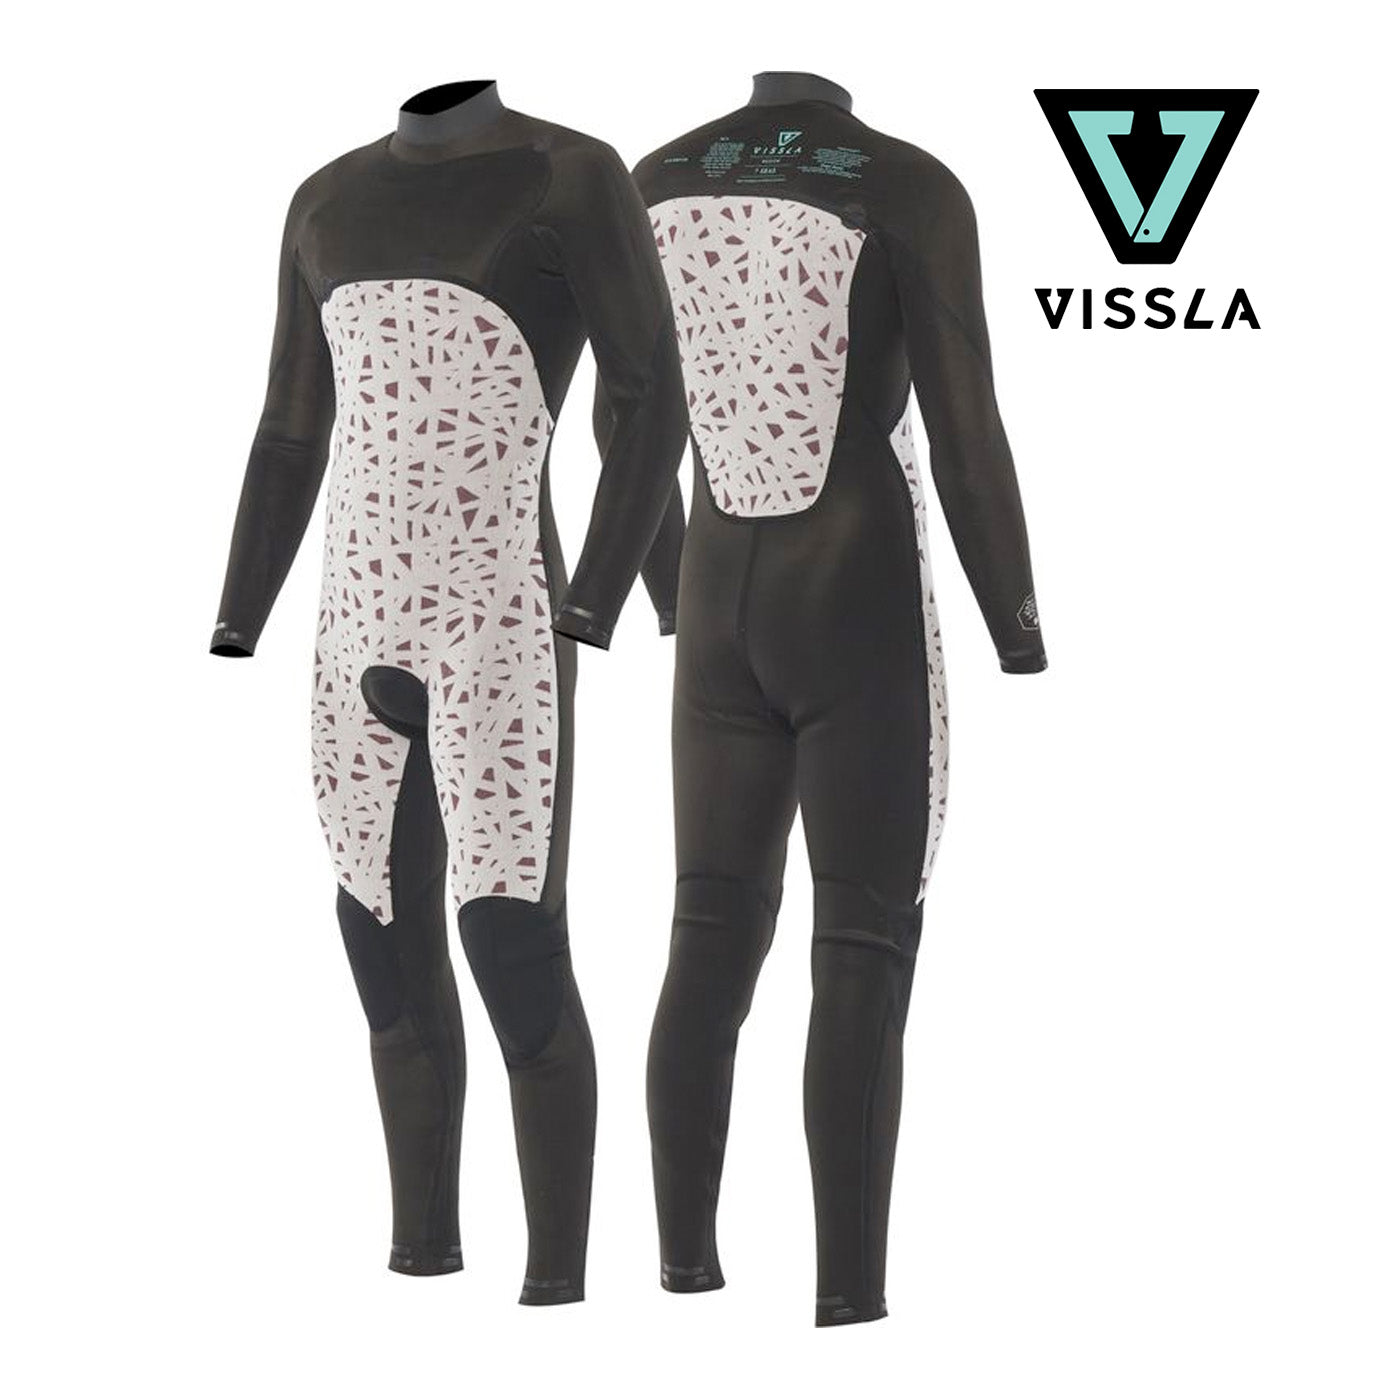 Vissla Men's 7 Seas 3/2mm Full Wetsuit Chest Zip